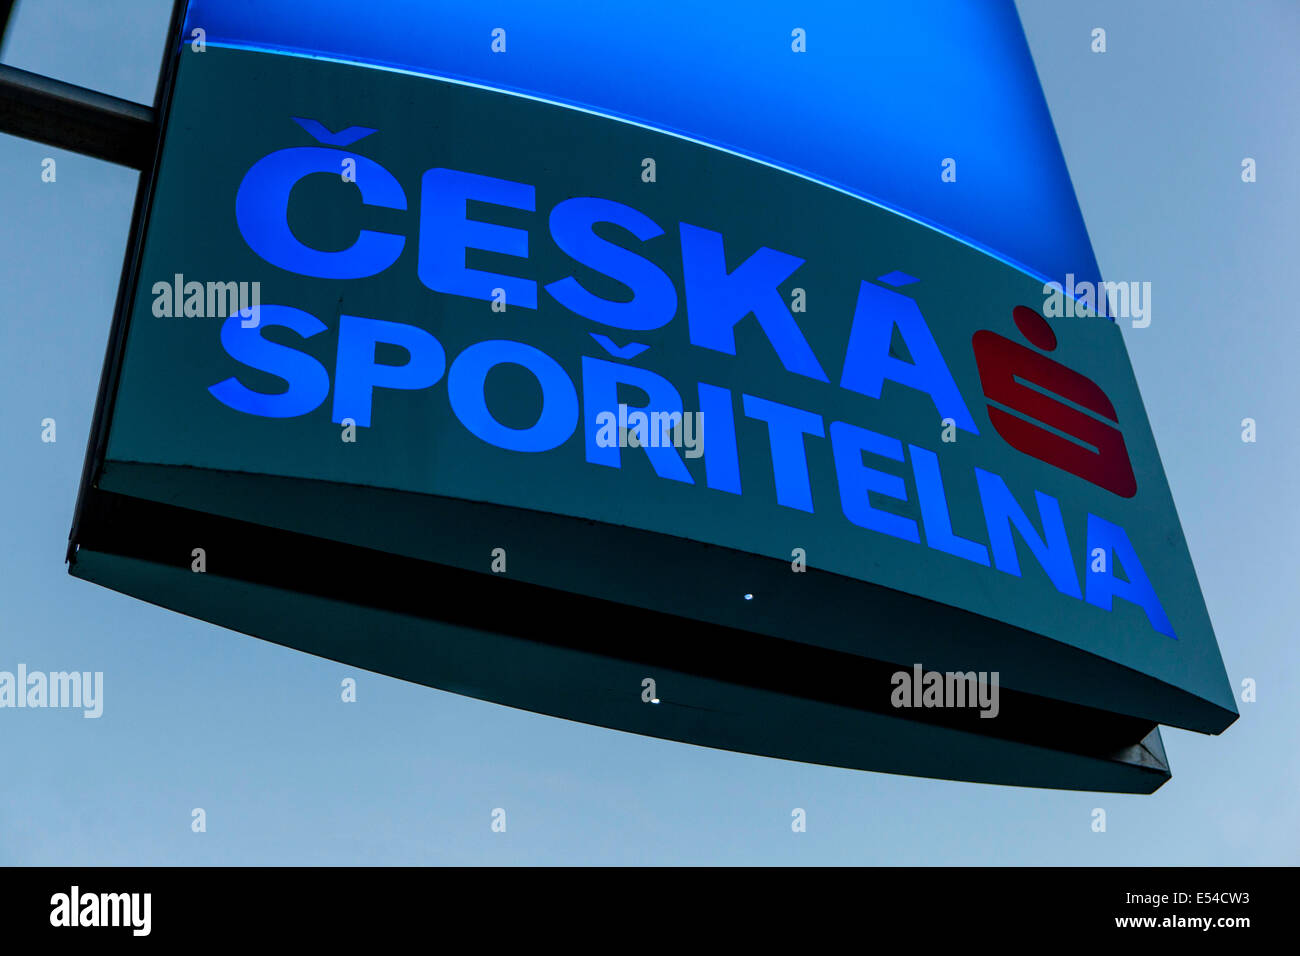 Ceska Sporitelna, Czech Savings Bank logo sign Stock Photo